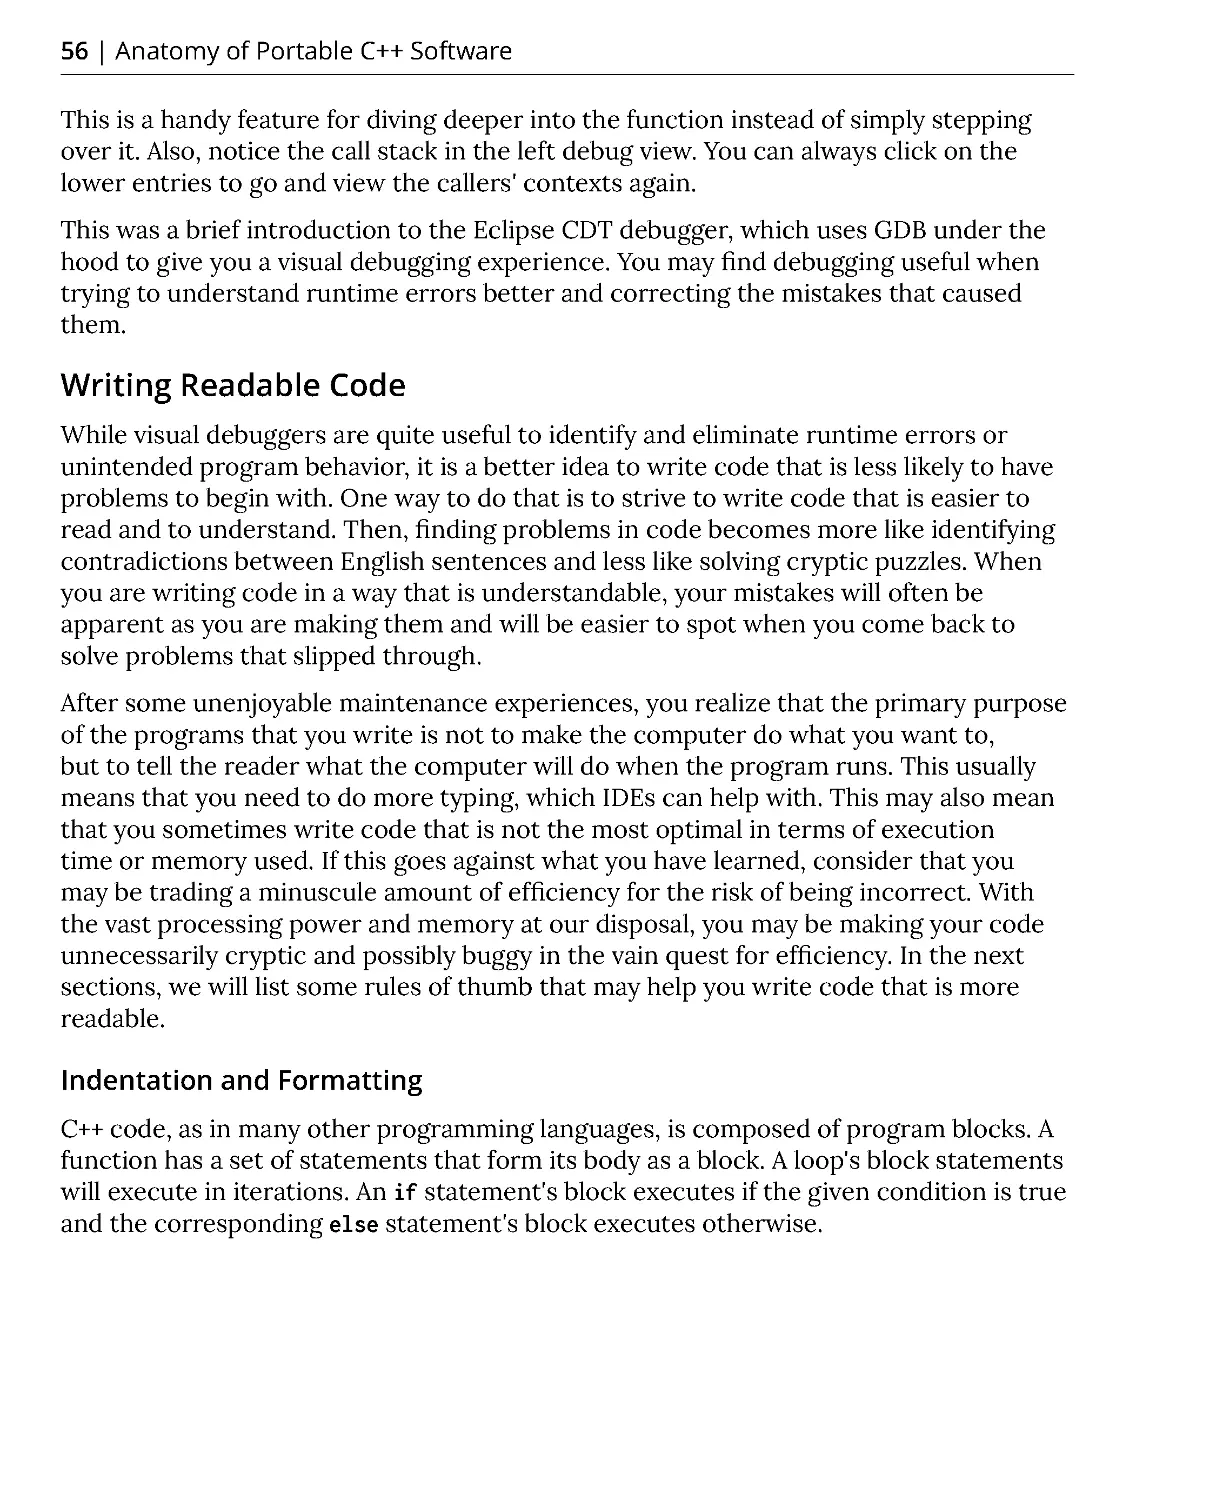 Writing Readable Code